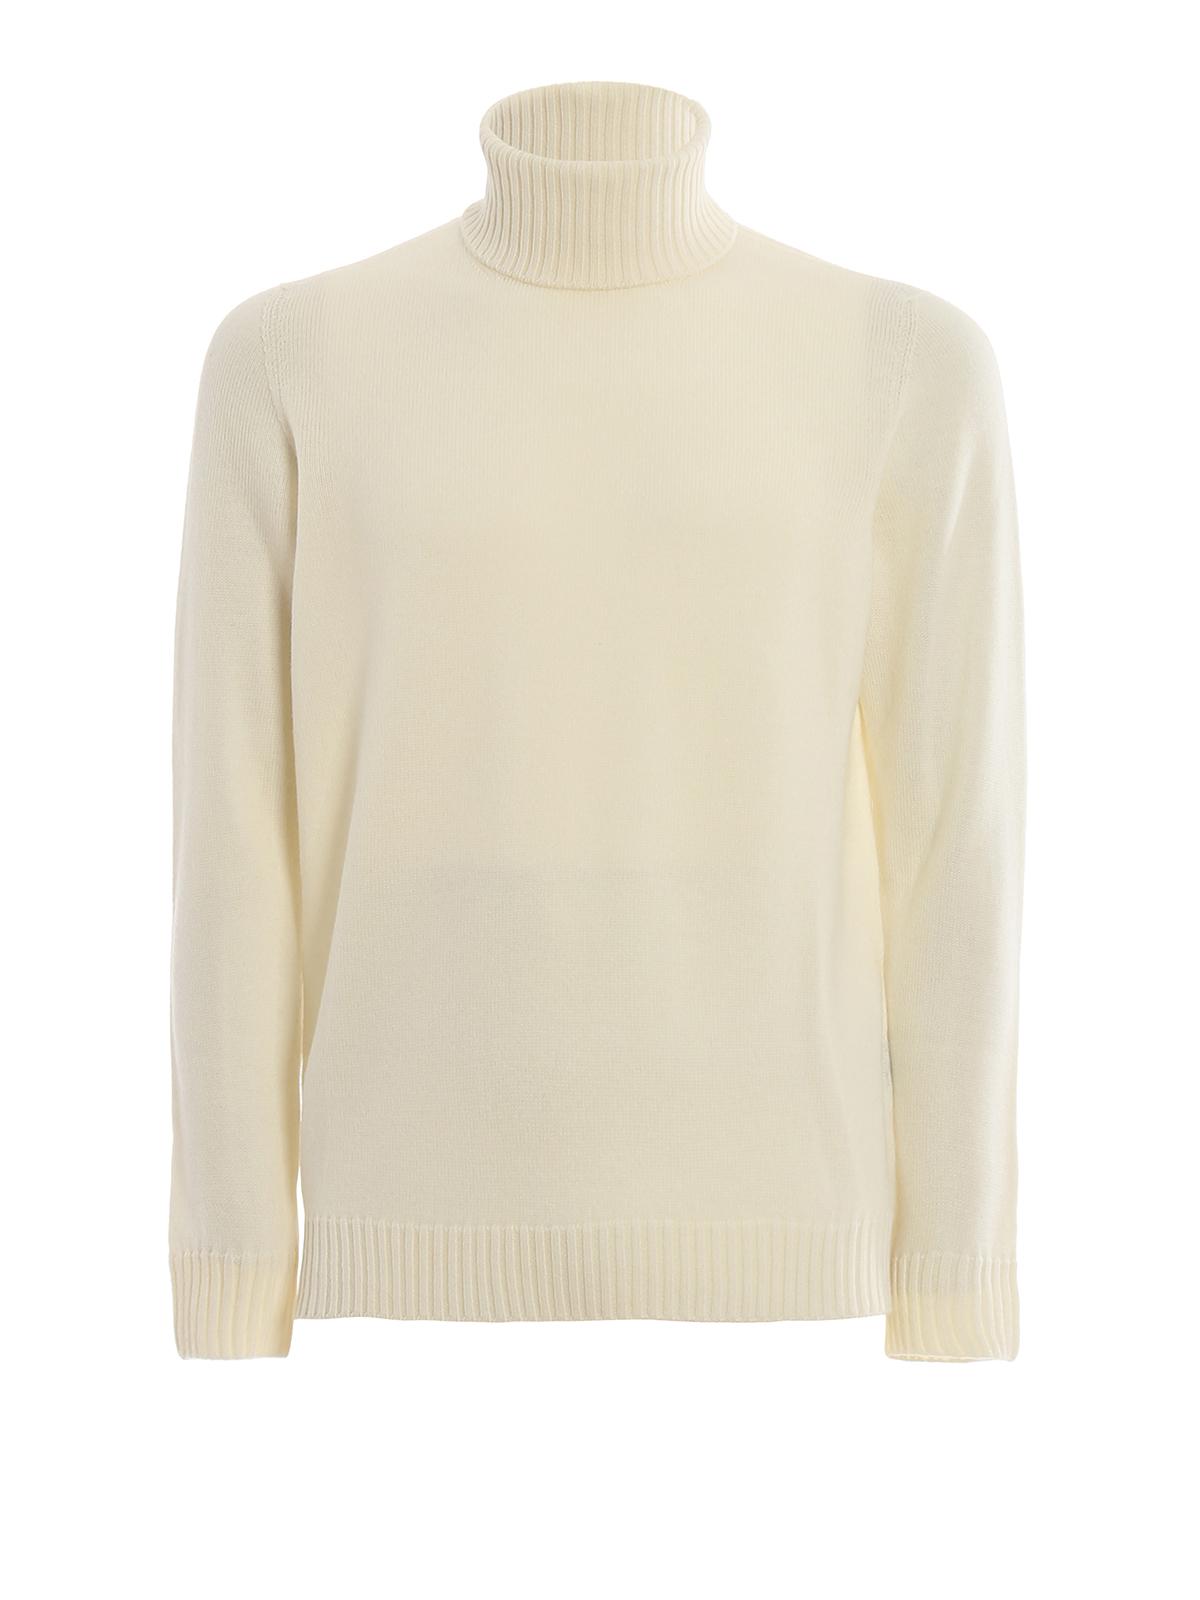 Drumohr White Merino Wool Turtleneck Sweater for Men - Lyst